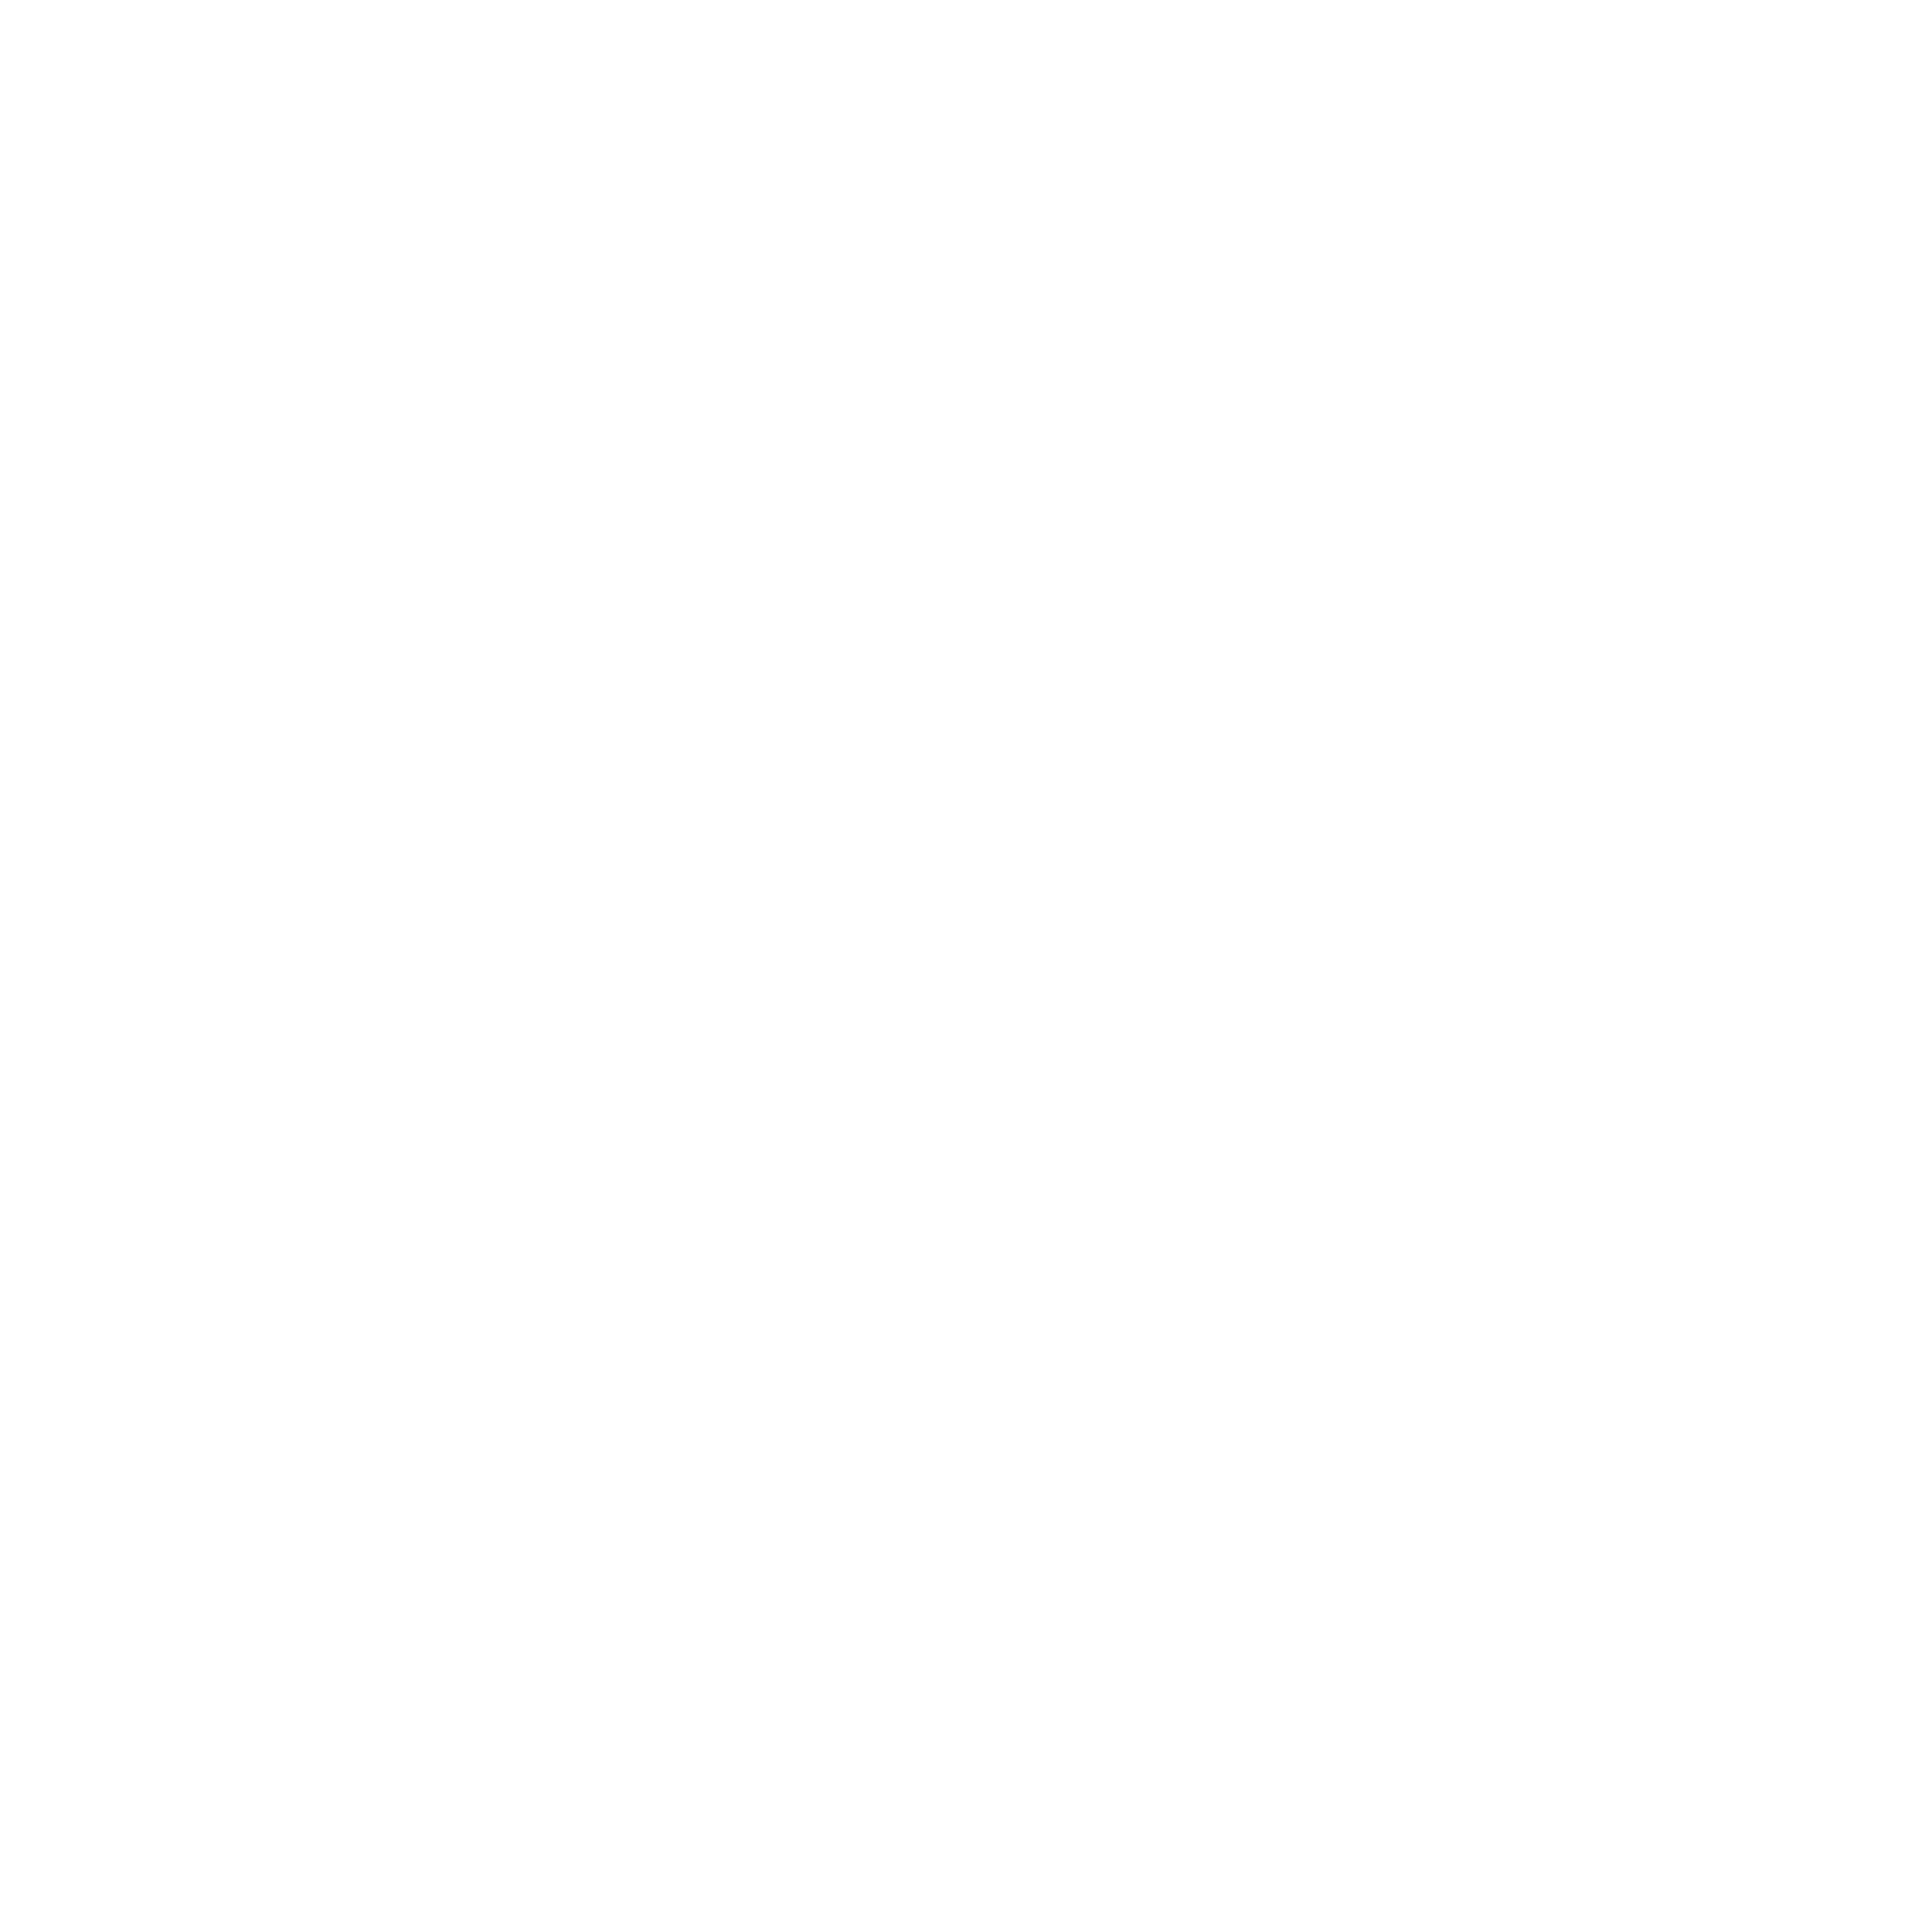 Turn into venus